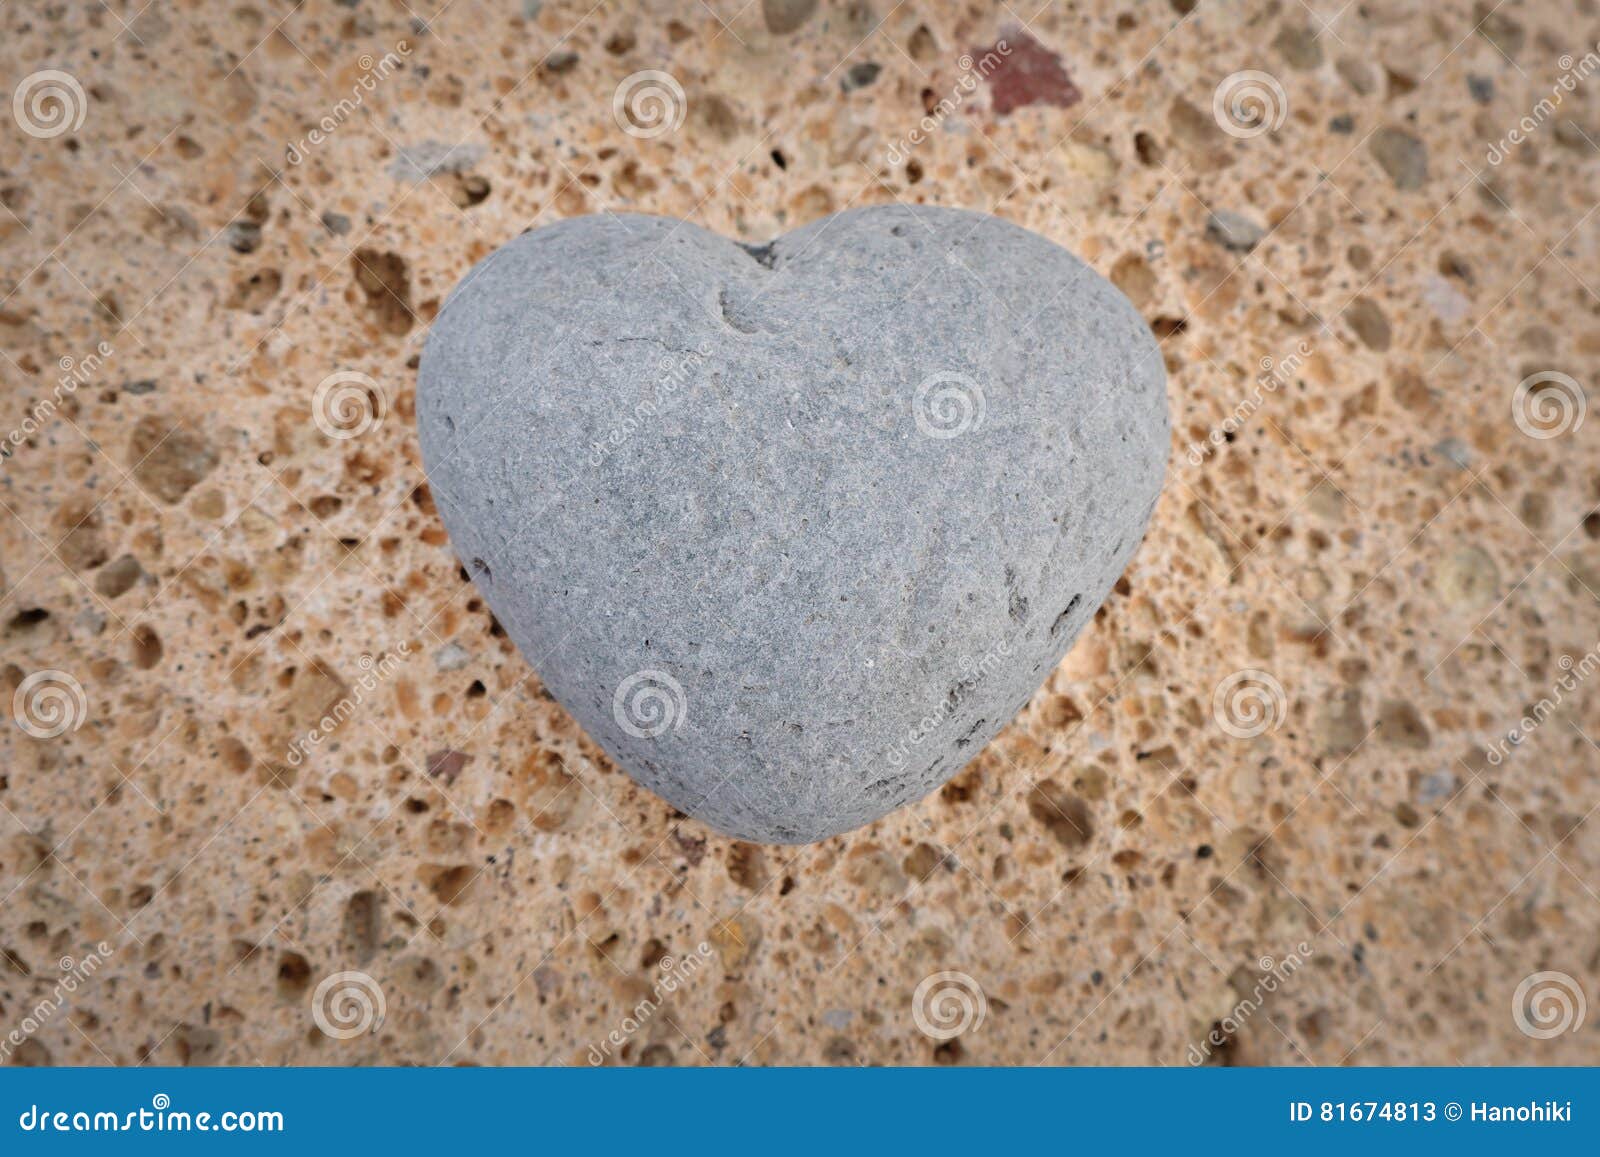 Stone shape. Камень в форме сердца. Камушек в форме сердечка. Сердце Стоун. Камень Шейп.